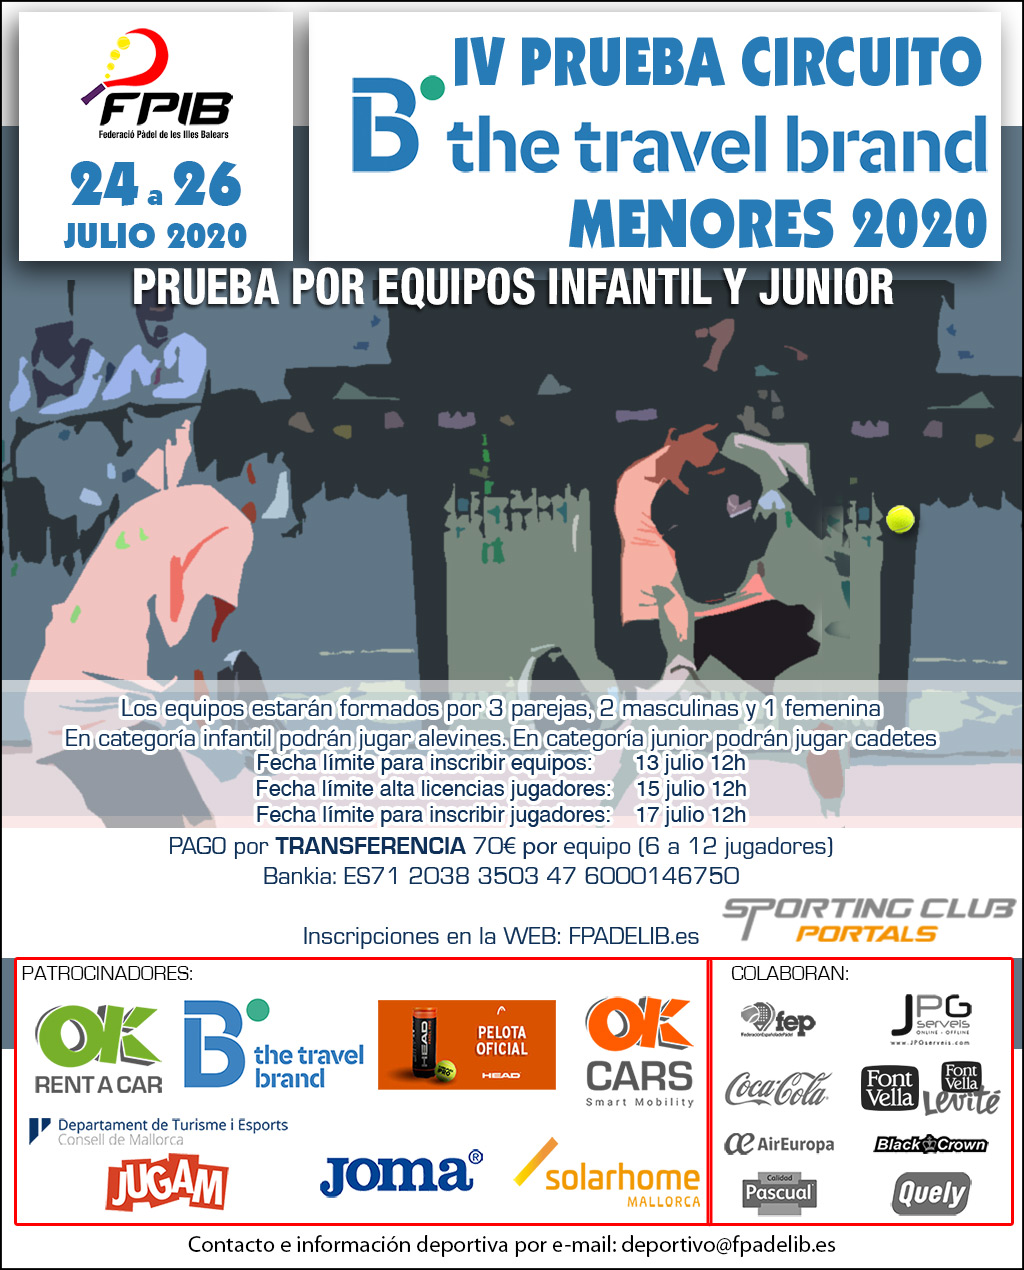 IV Prueba Circuito B the travel brand de menores - 2020